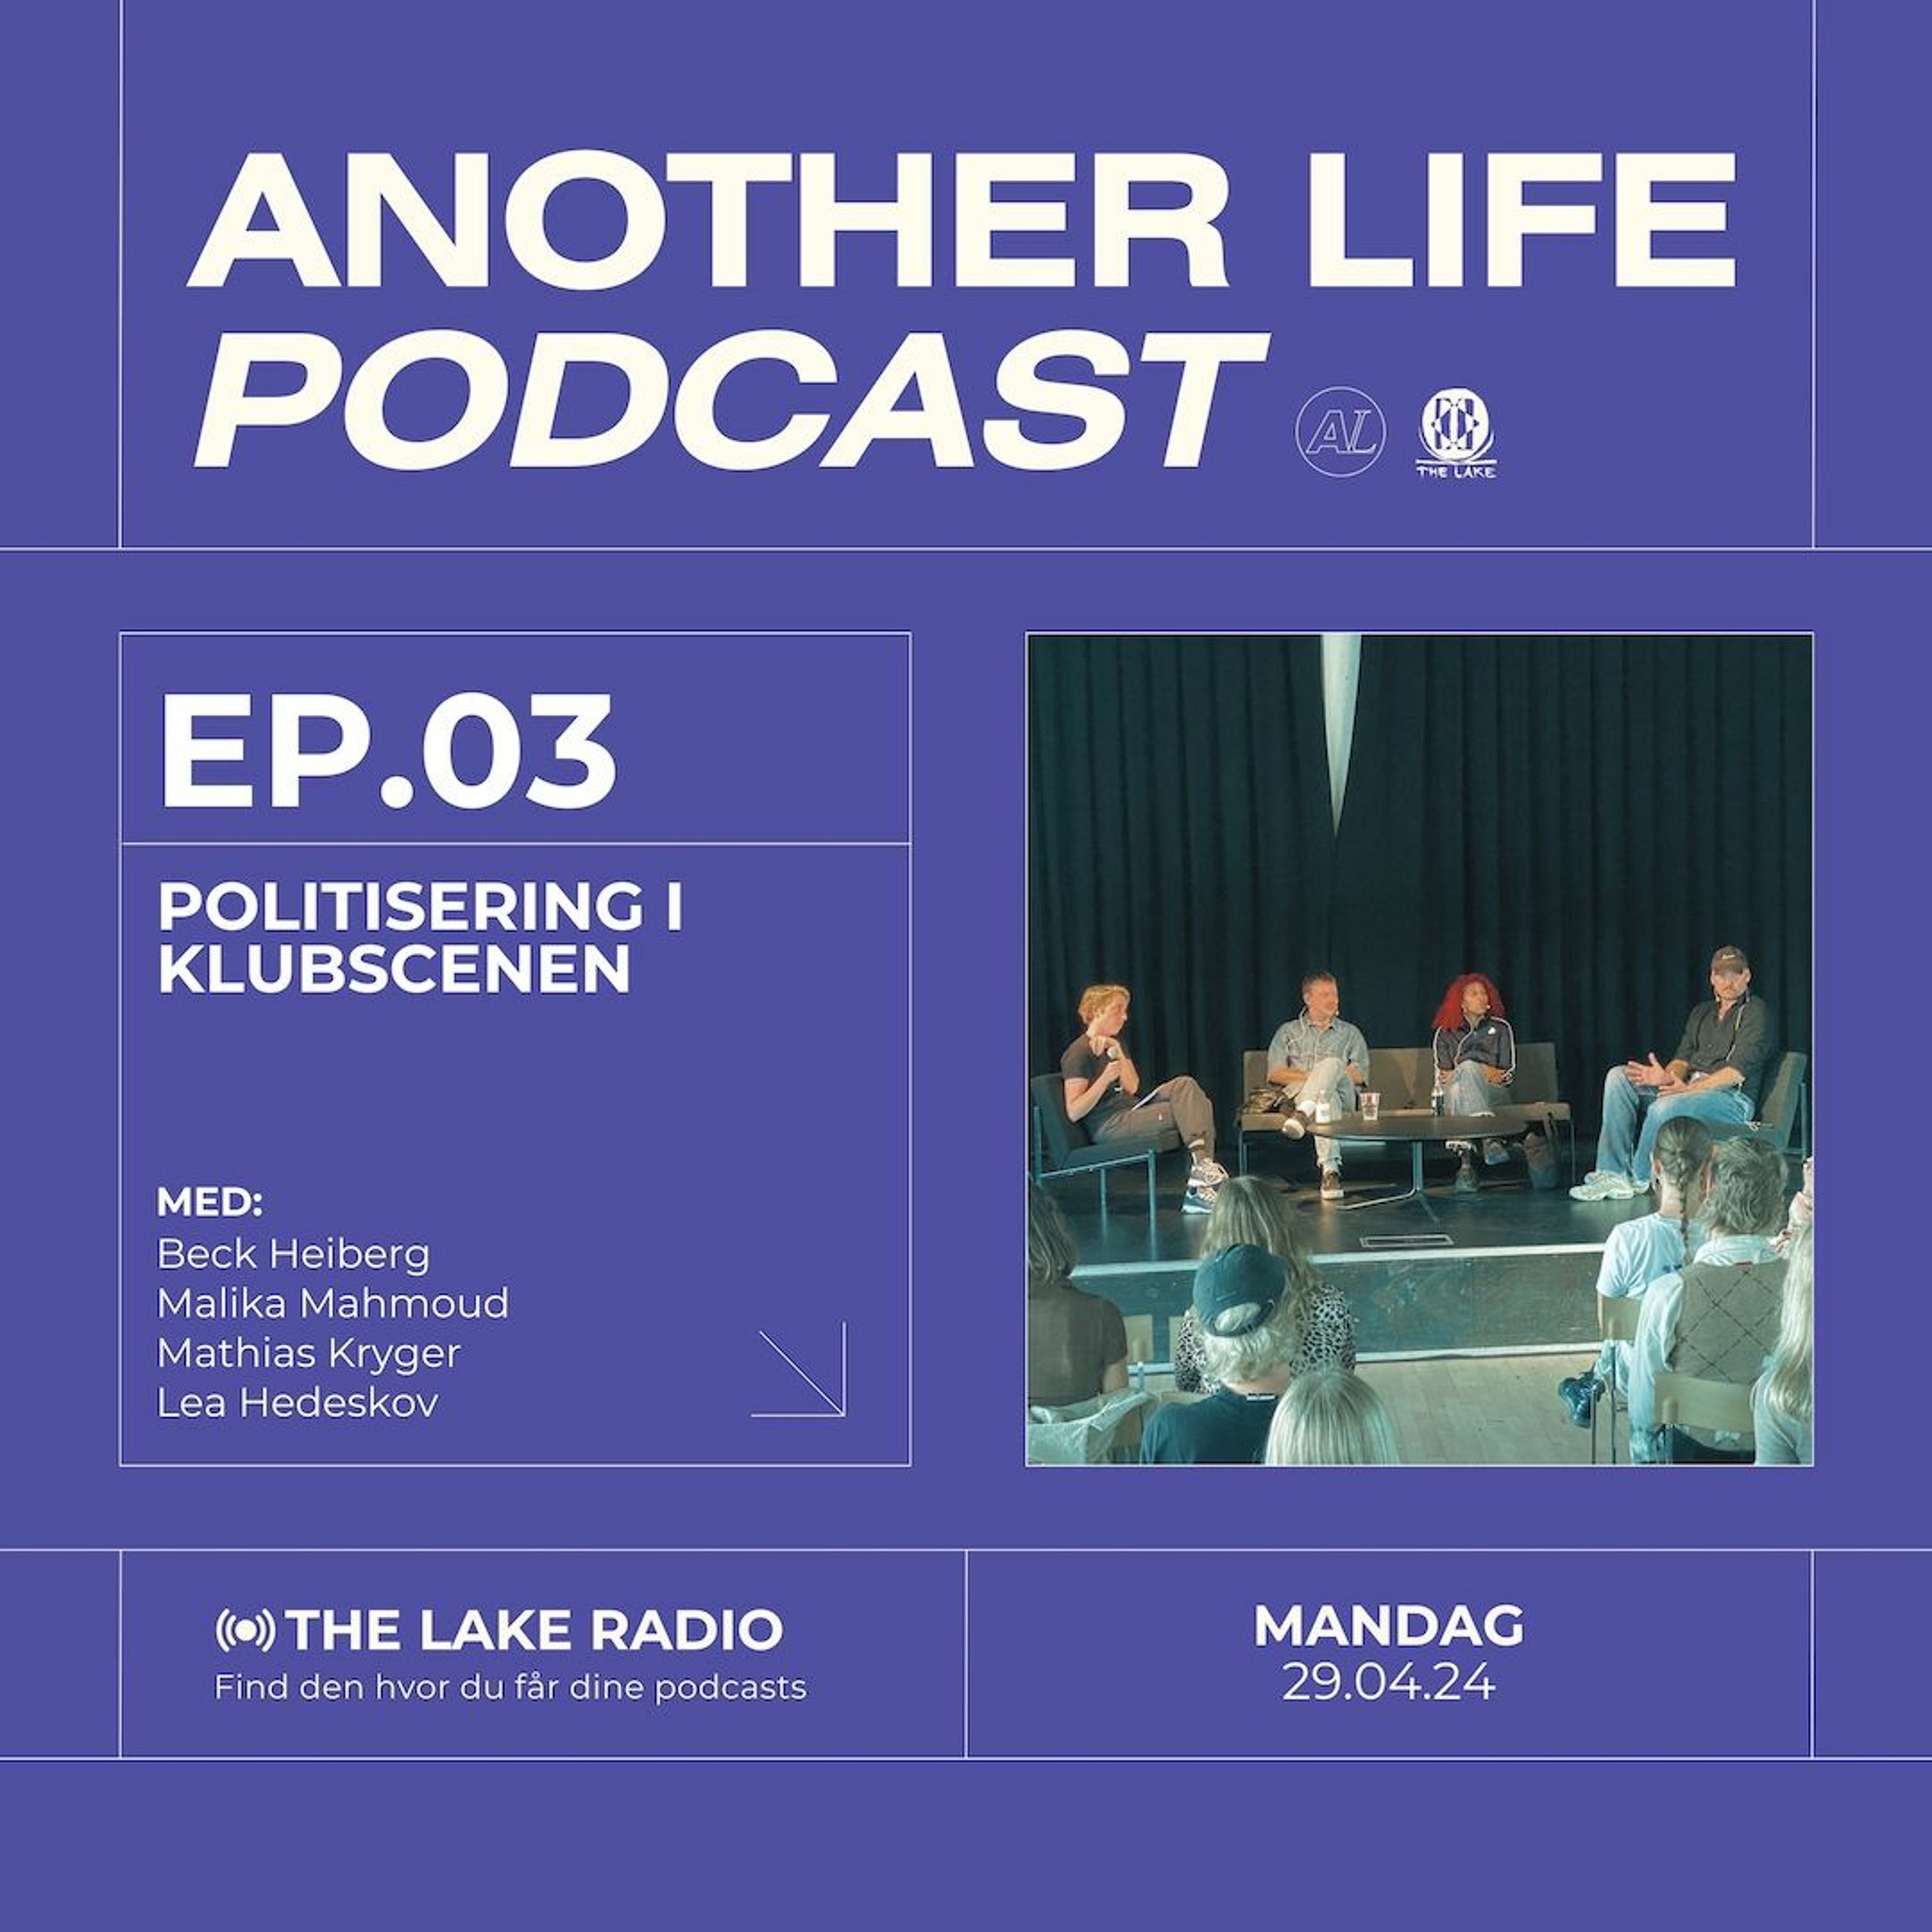 Another Life Podcast #3: Politisering i klubscenen